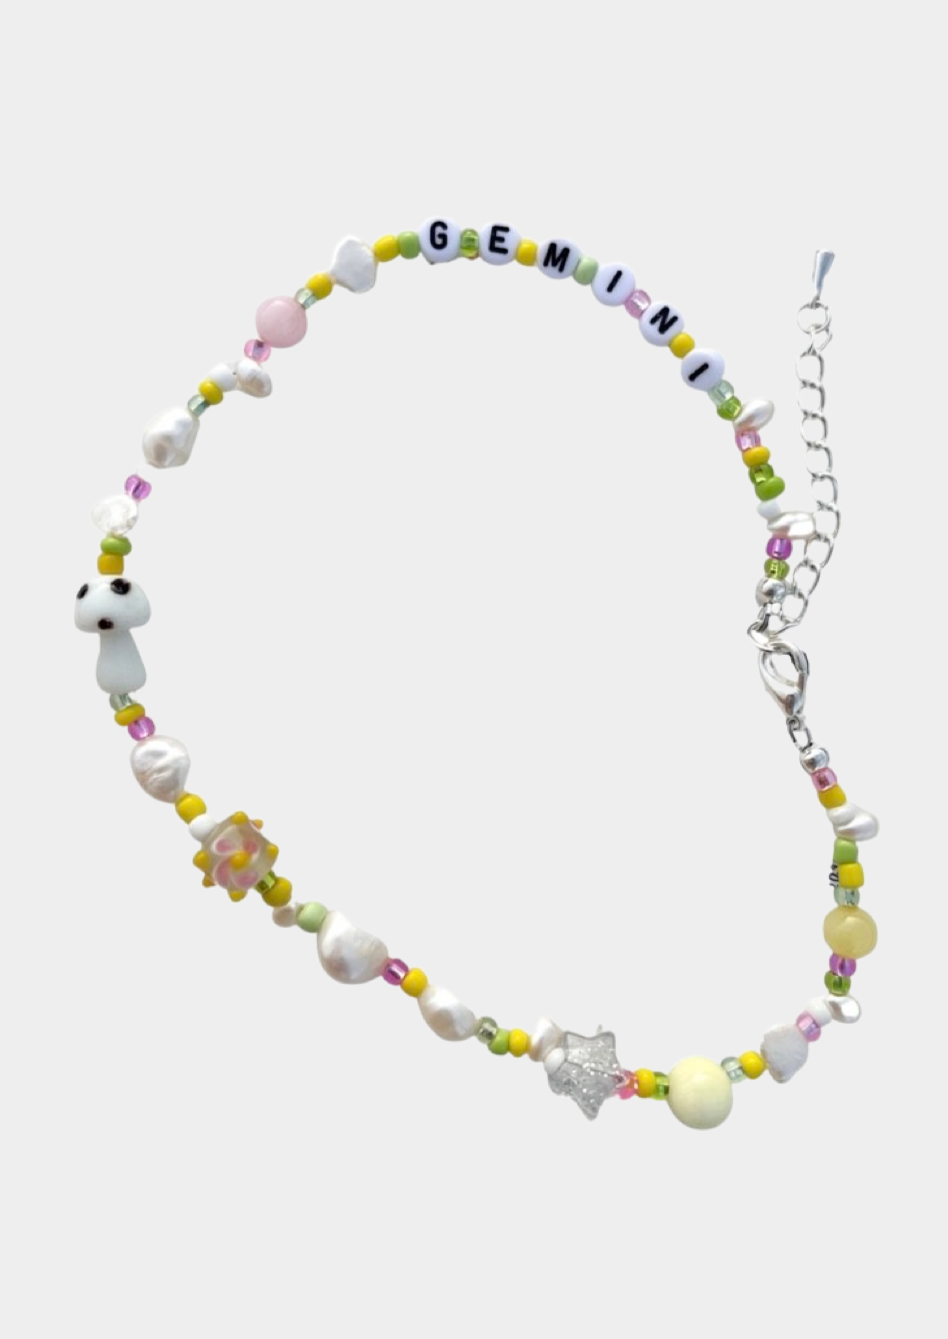 DOOZ zodiac charm necklace gemini multimedia freshwater pearls and glass beads handmade in usa